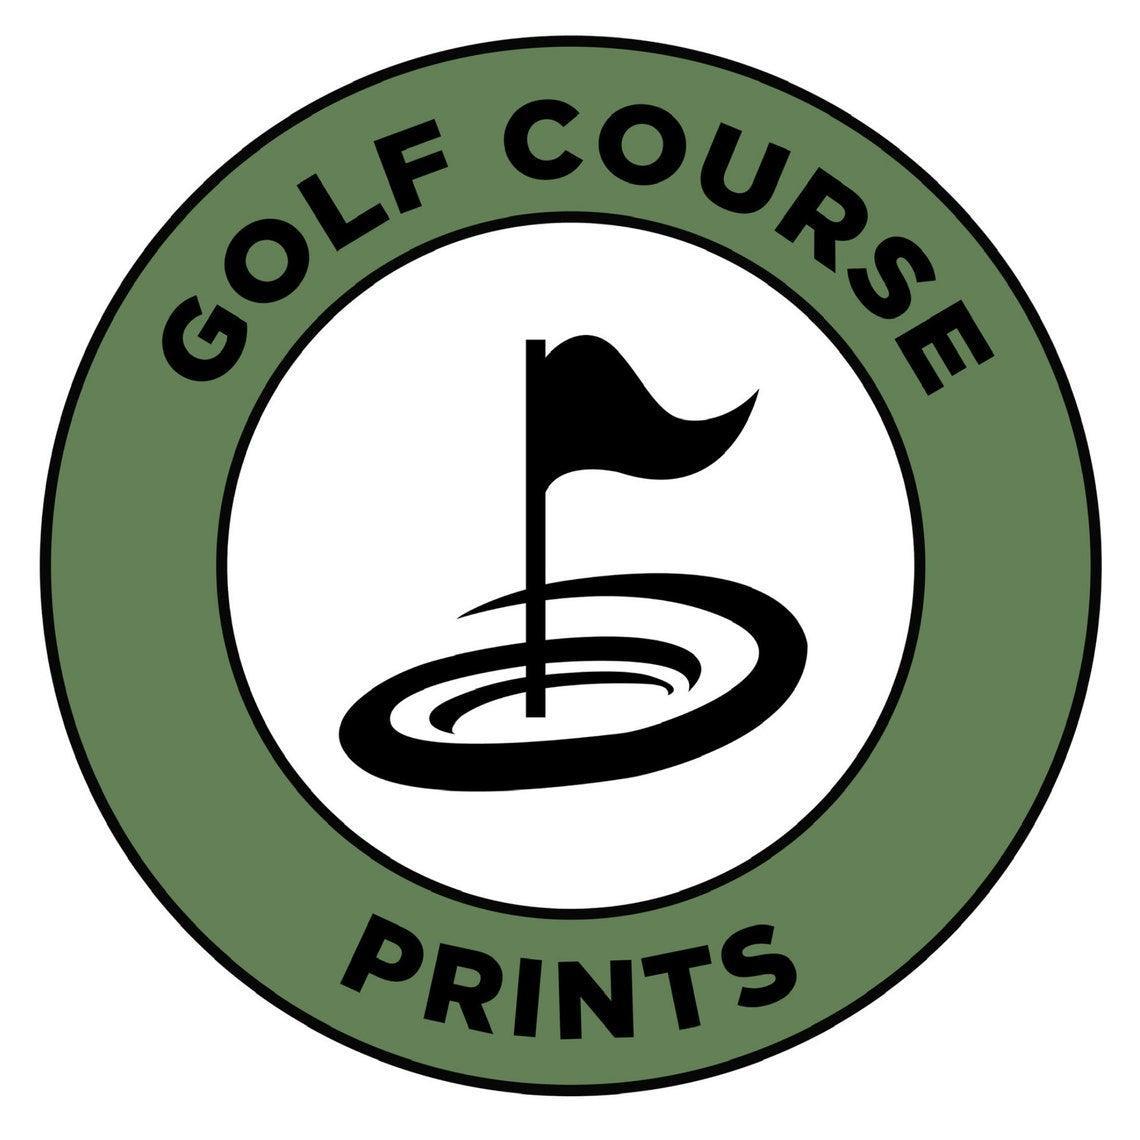 TPC Scottsdale, Arizona - Signature Designs by Golf Course Prints